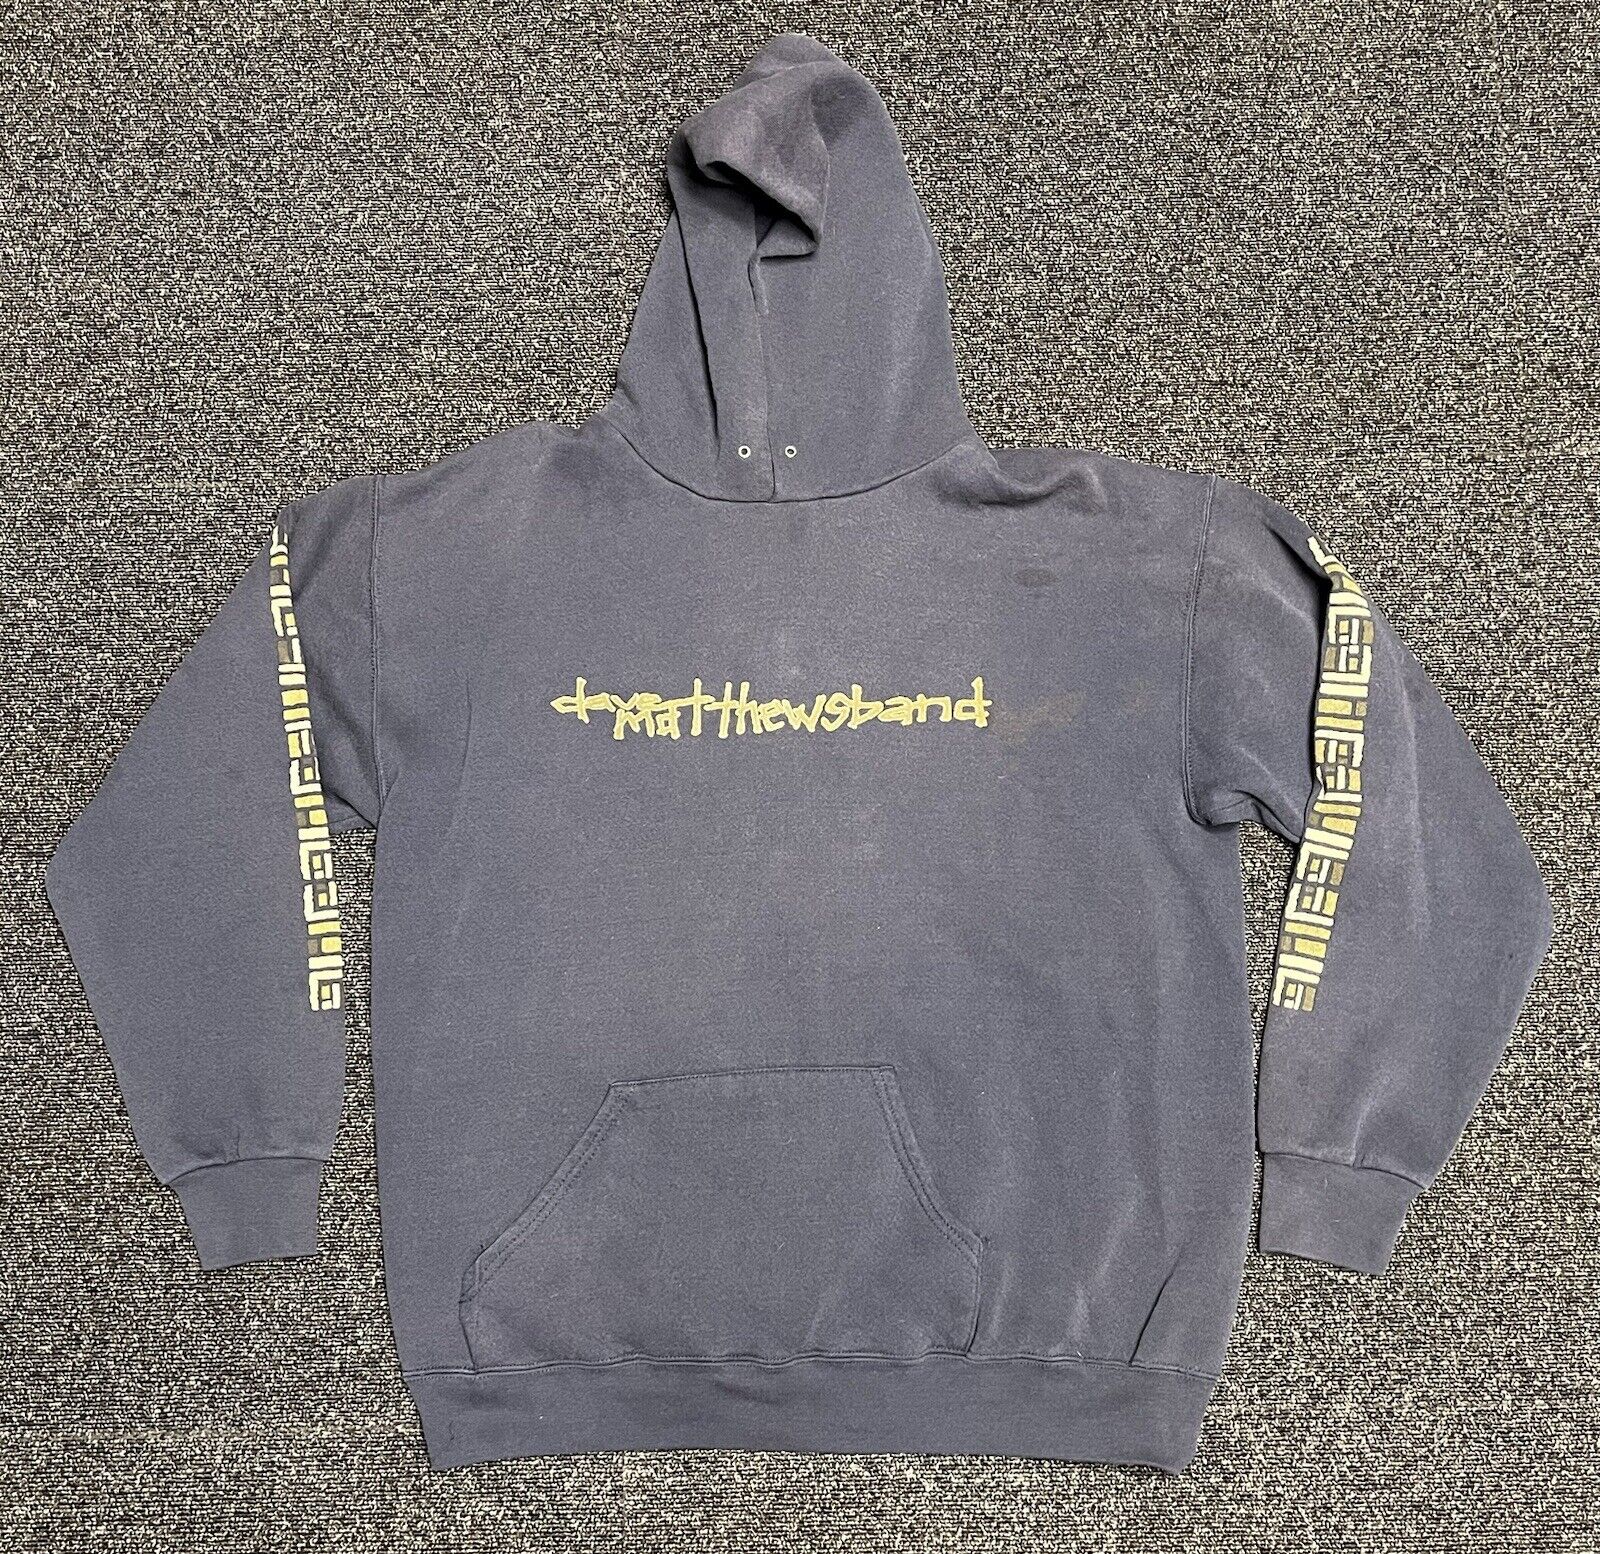 VTG Dave Matthews Band Hoodie sweatshirt hooded size Large faded rare